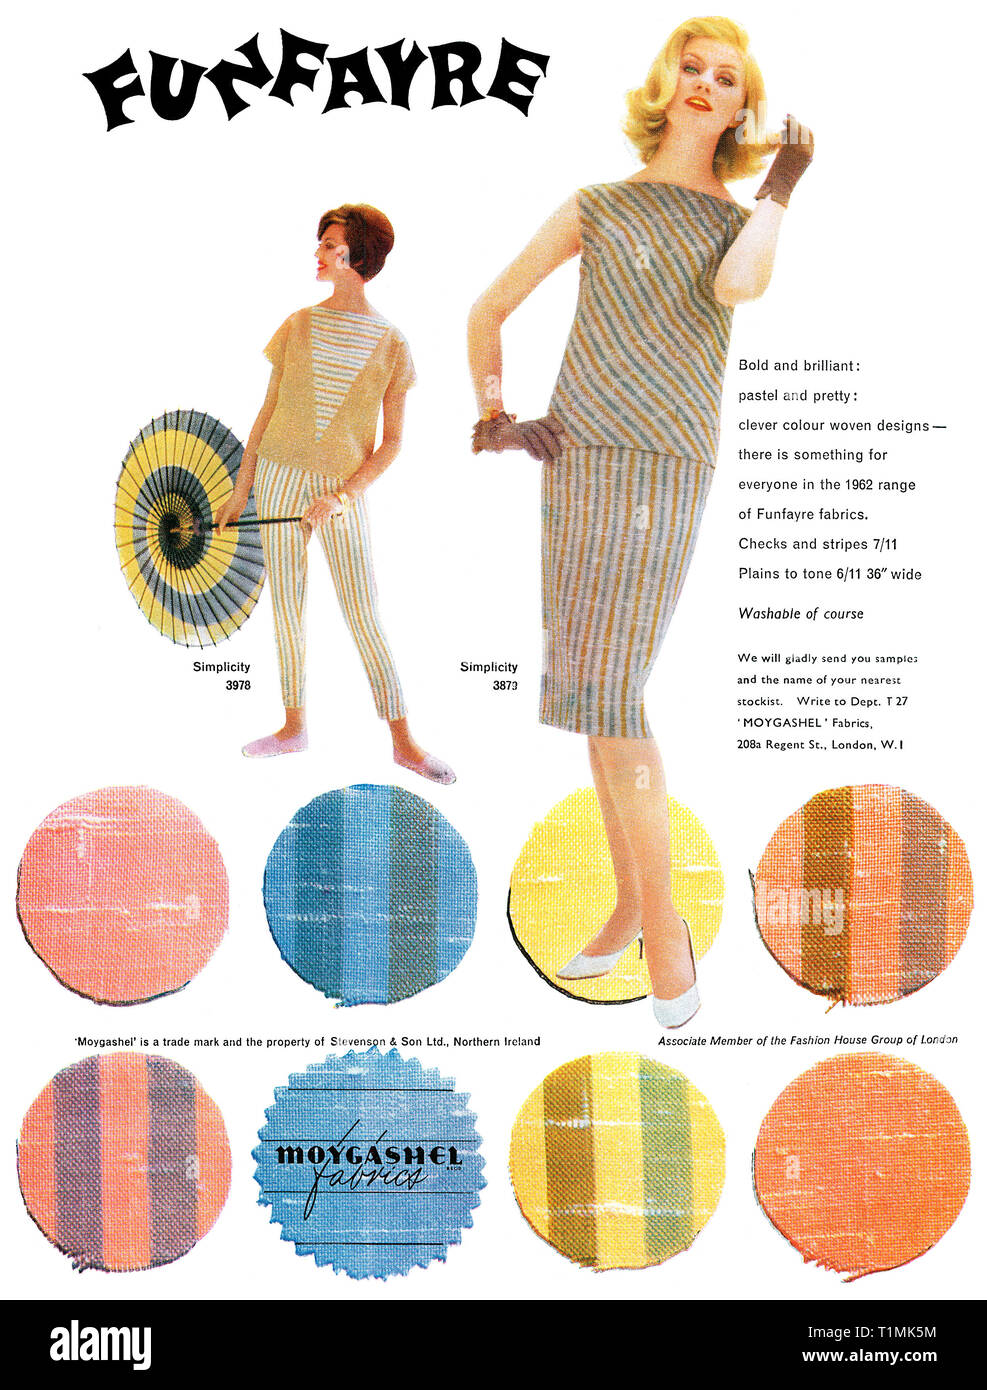 1962 British advertisement for Moygashel fabrics for women's fashion. Stock Photo